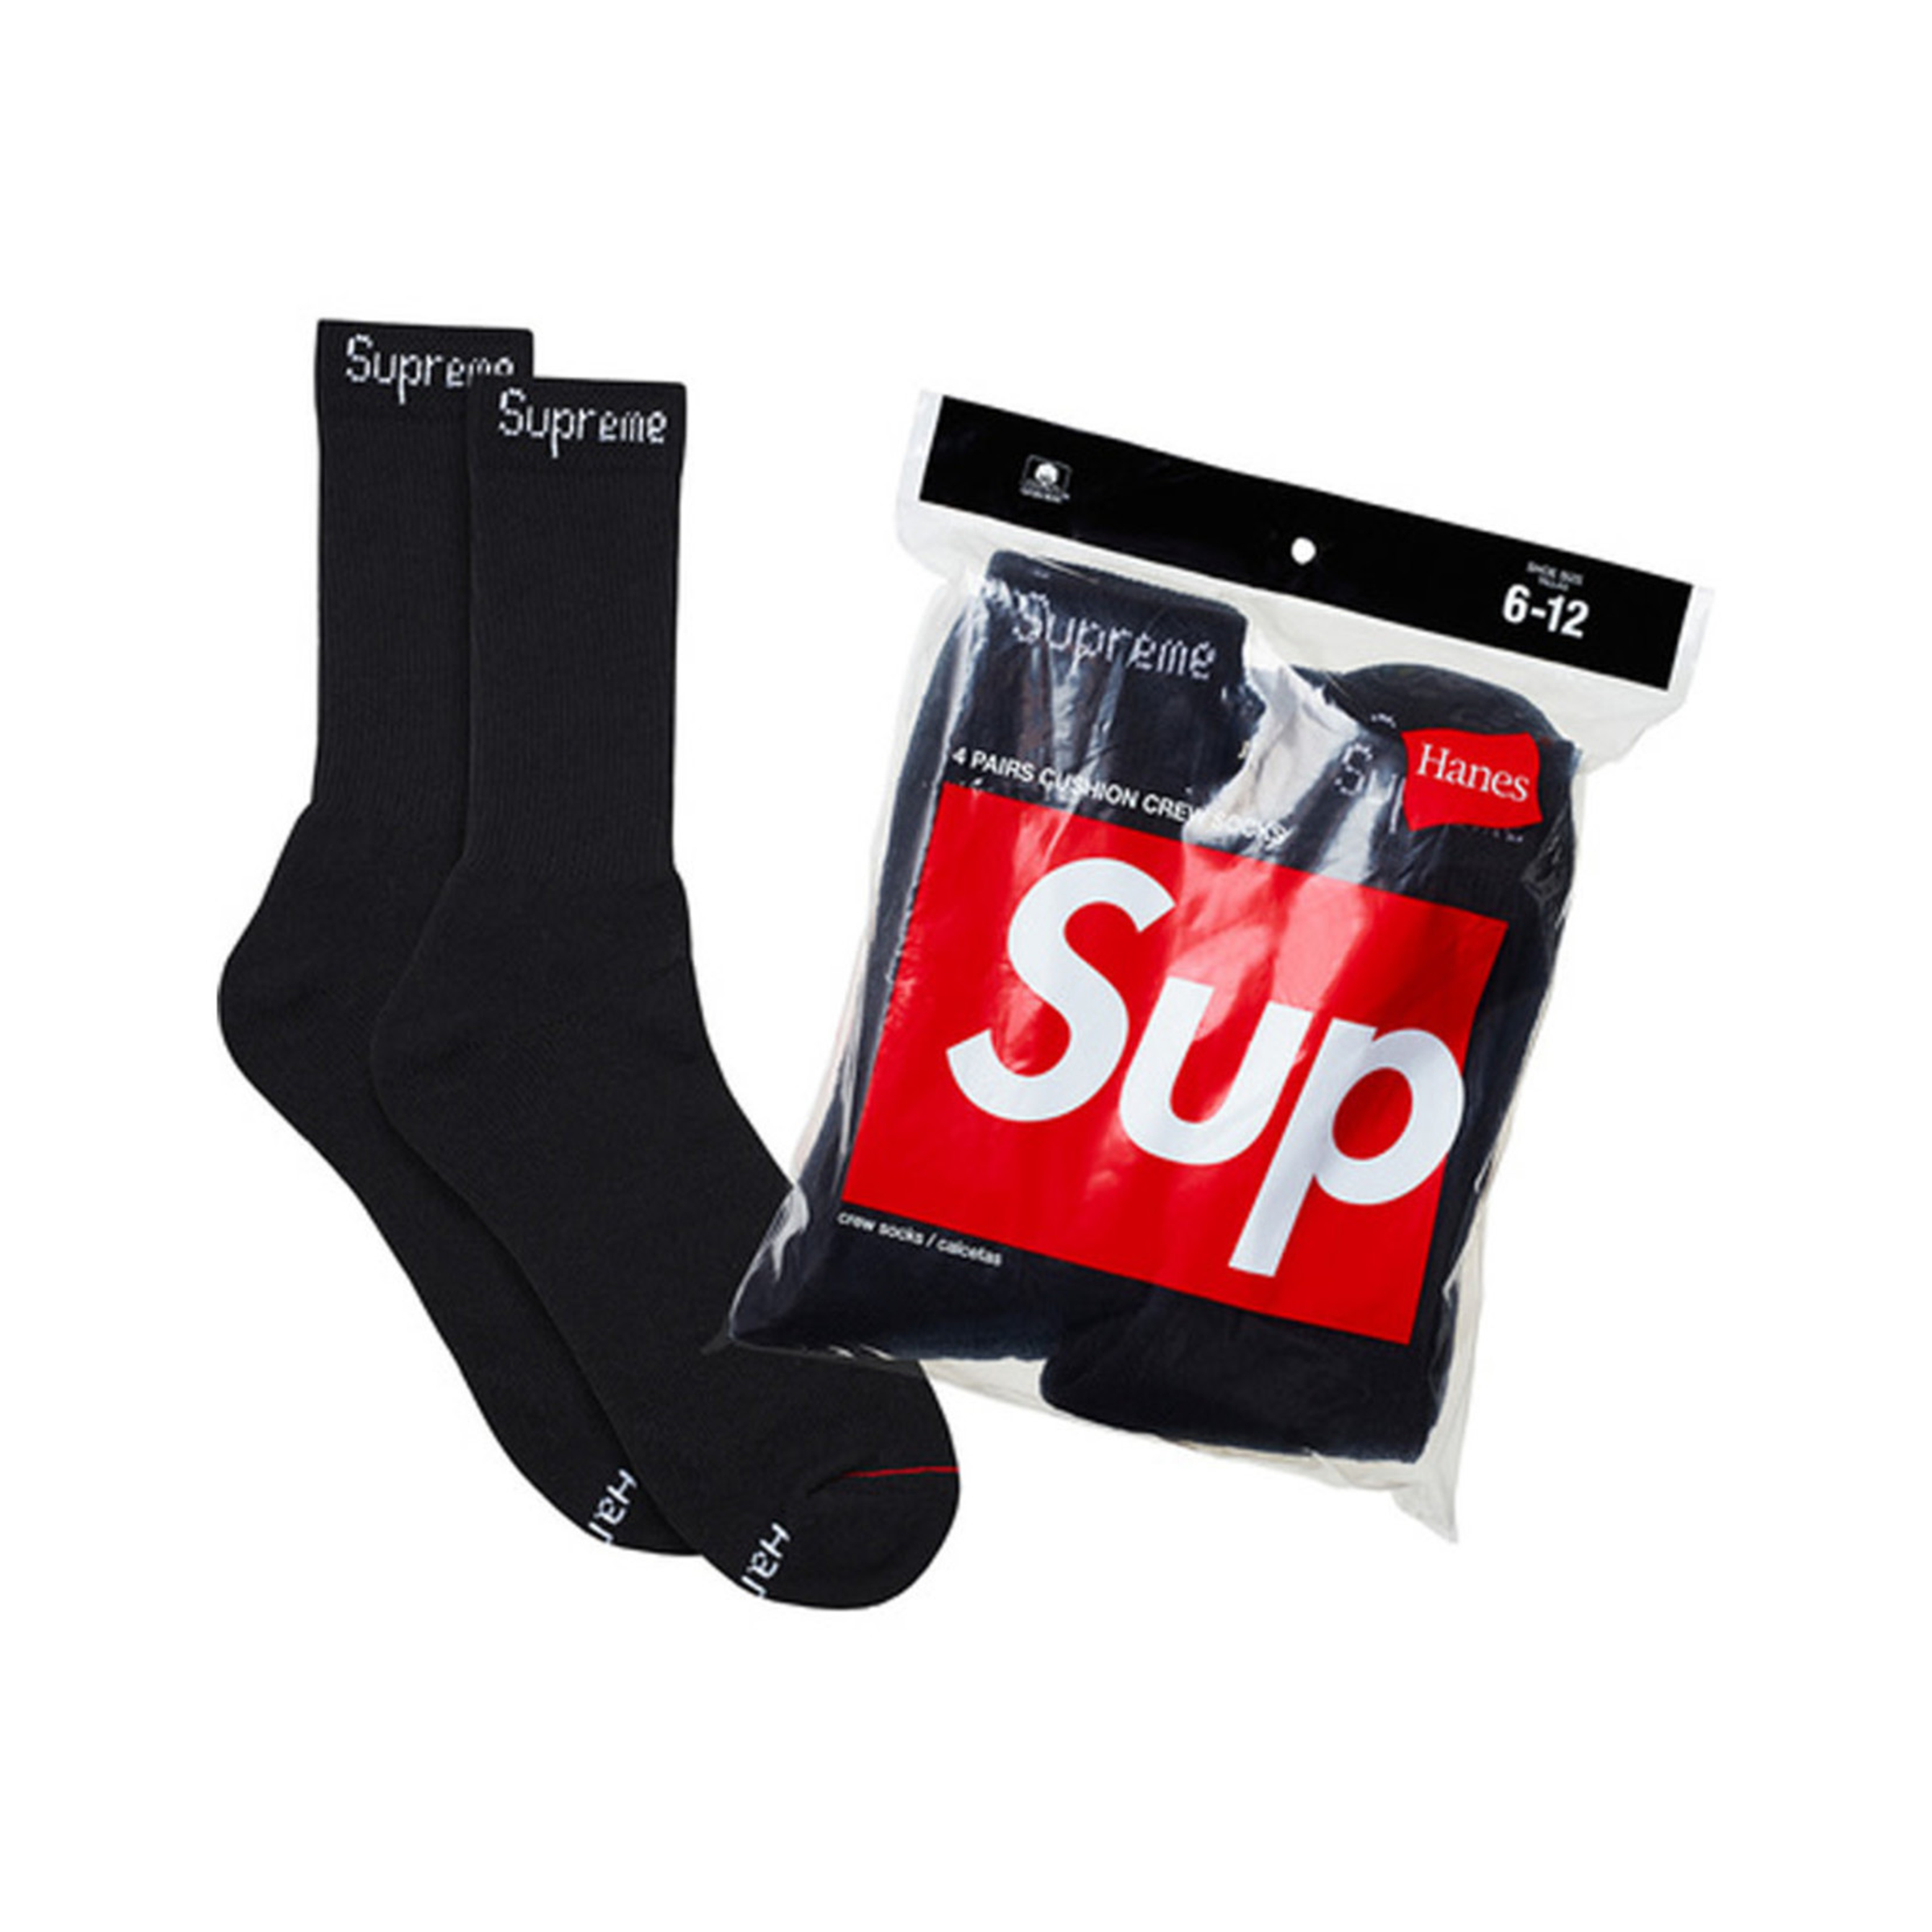 Supreme x Hanes - Black Socks